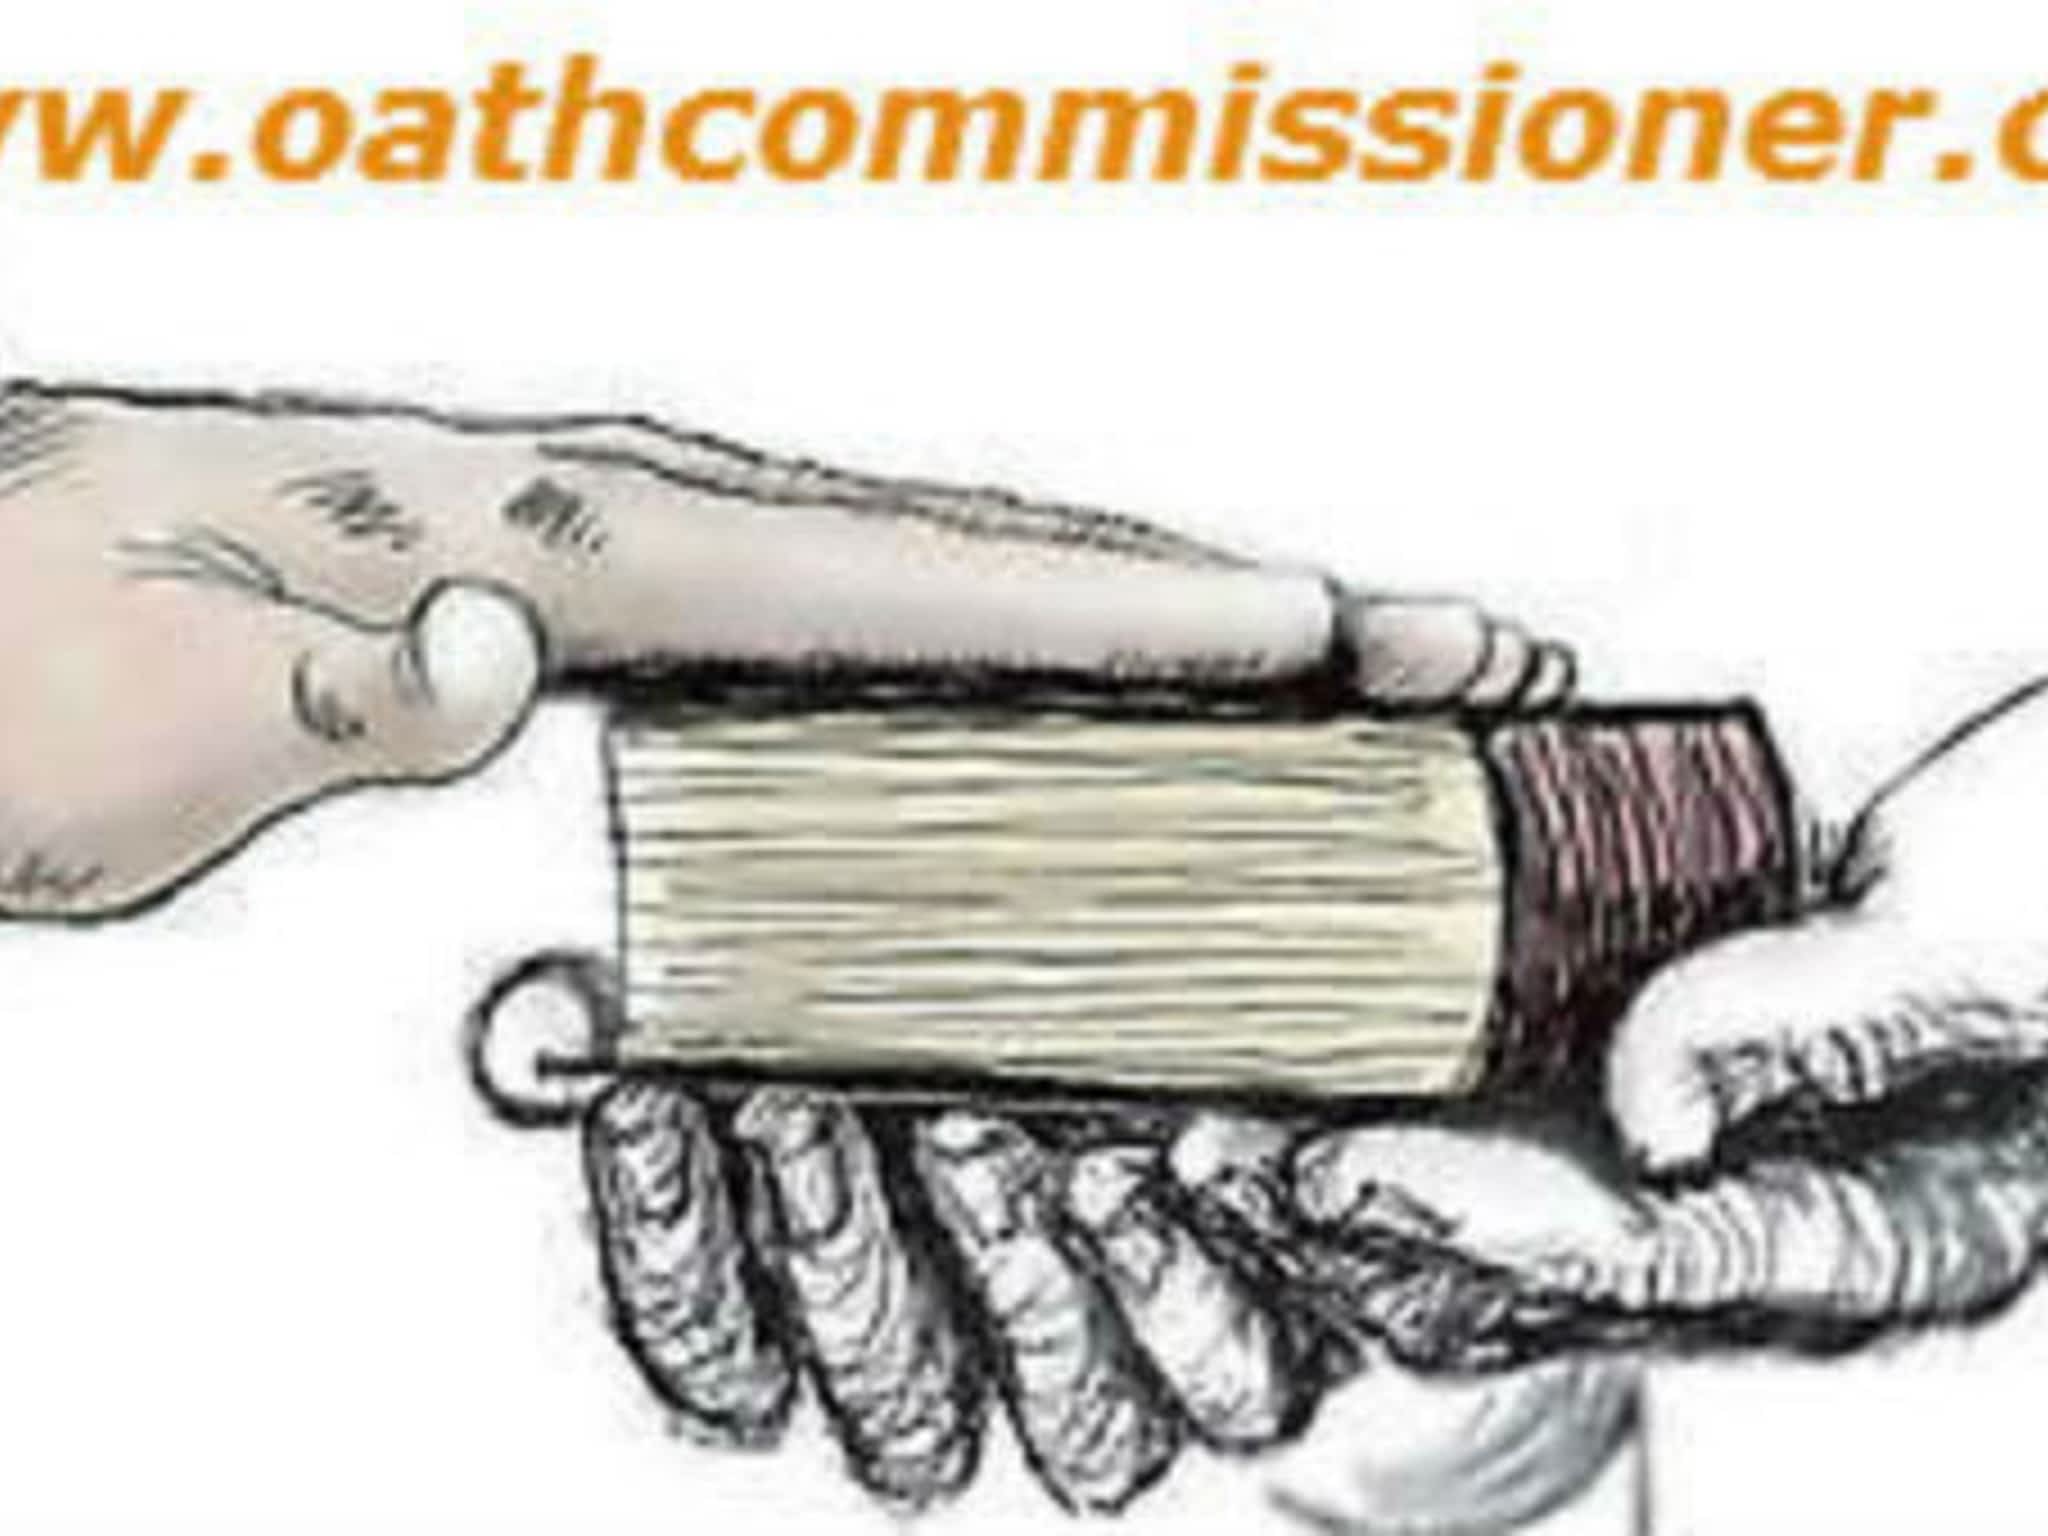 photo Commissioner of Oaths & Affidavits